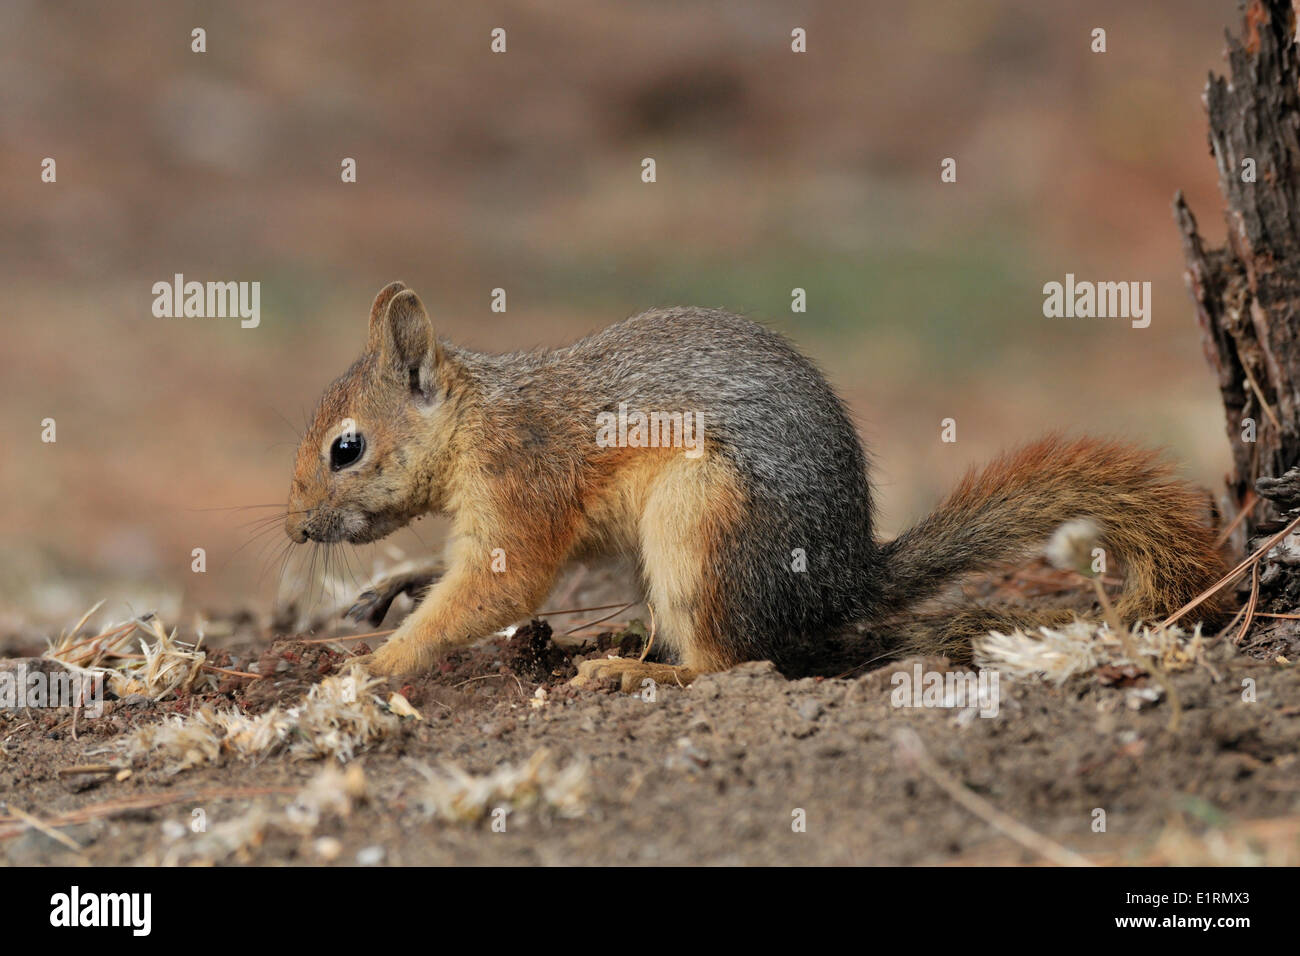 persian squirrel buried the acorn Stock Photo